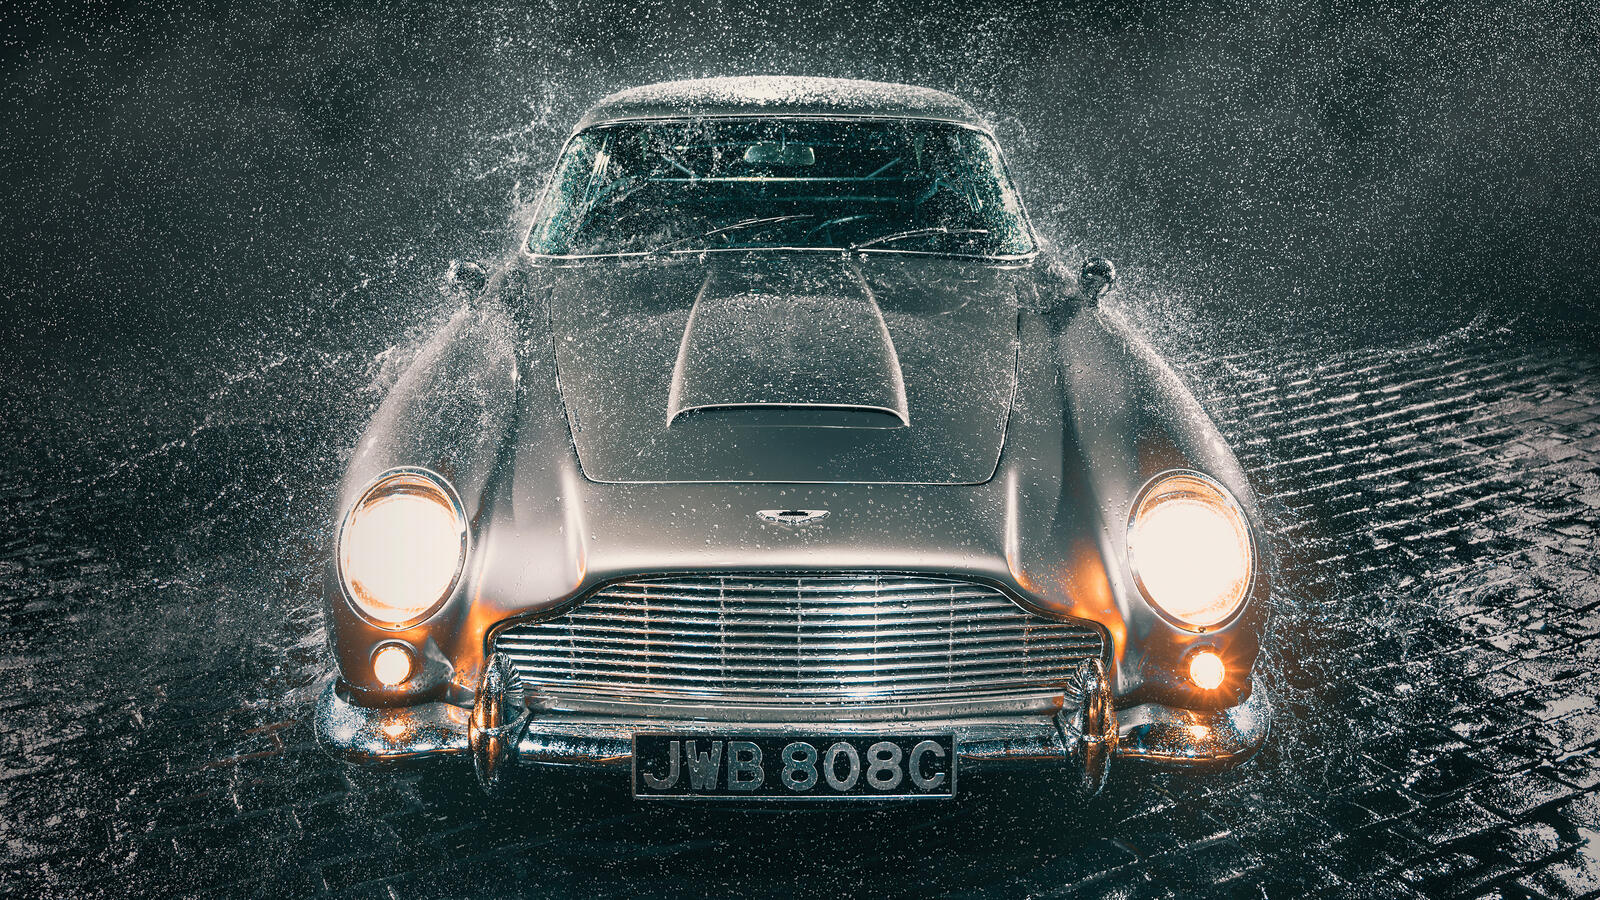 Бесплатное фото Aston martin db5 под дождем